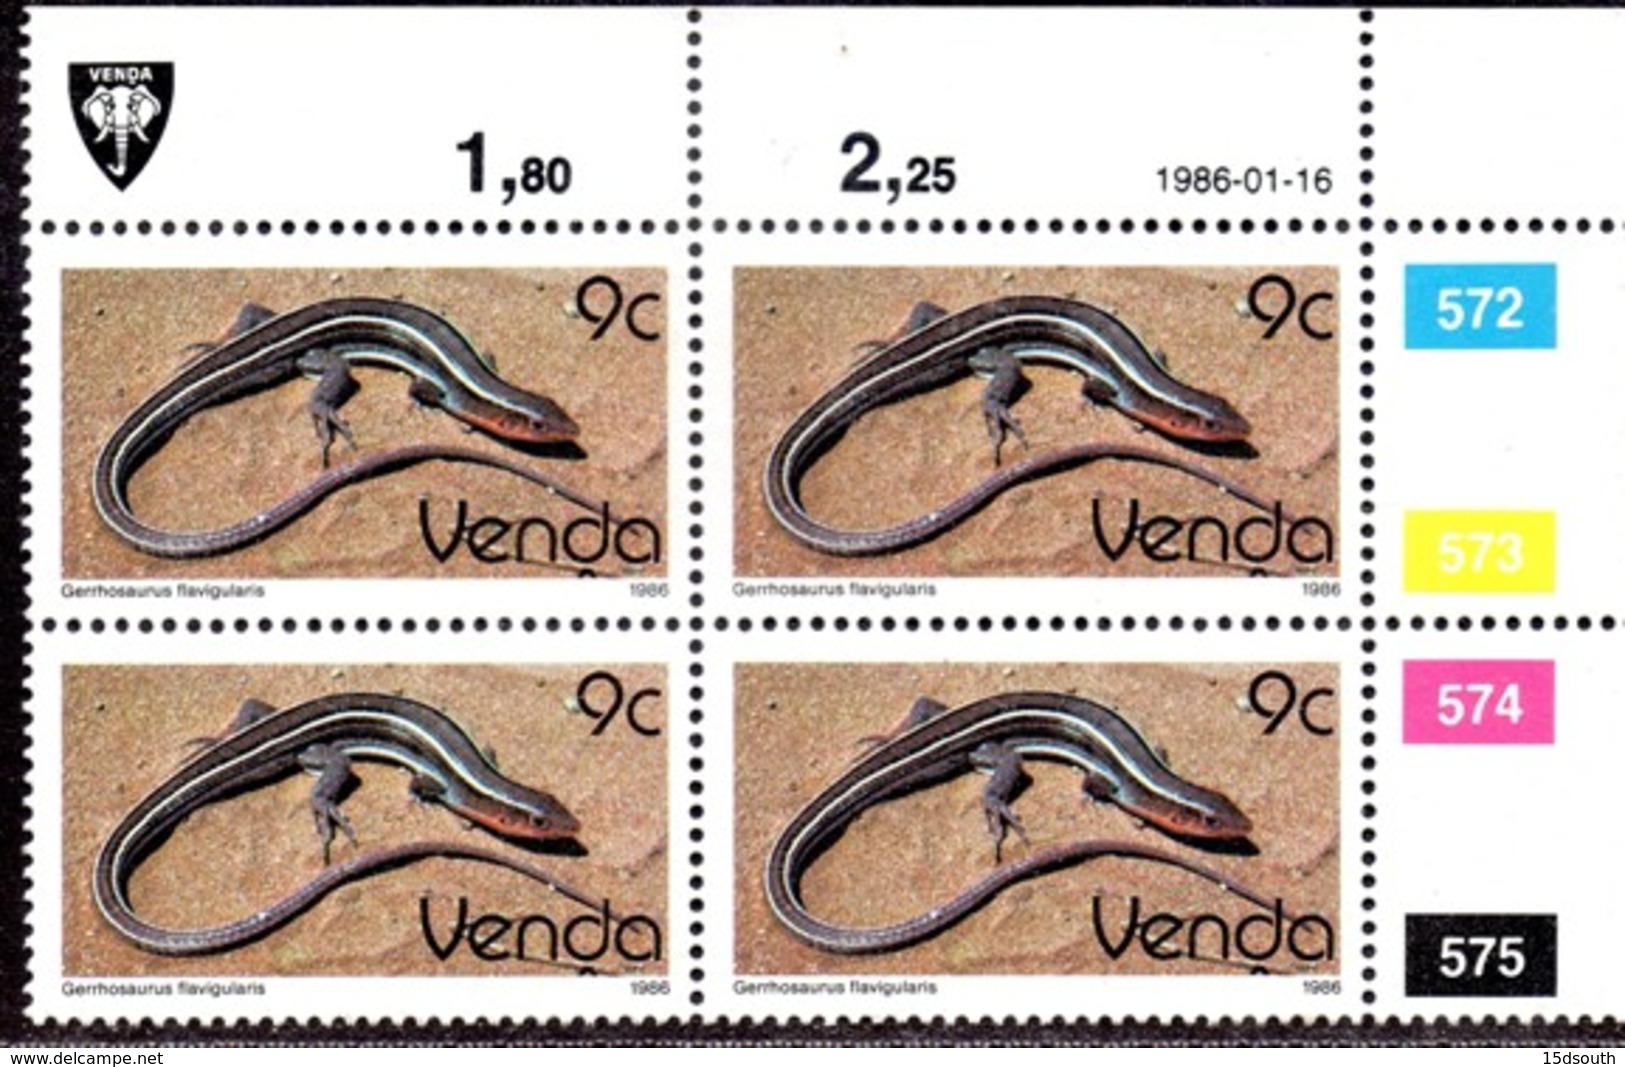 Venda - 1986 Reptiles 9c Control Block (1986.01.16) (**) - Venda